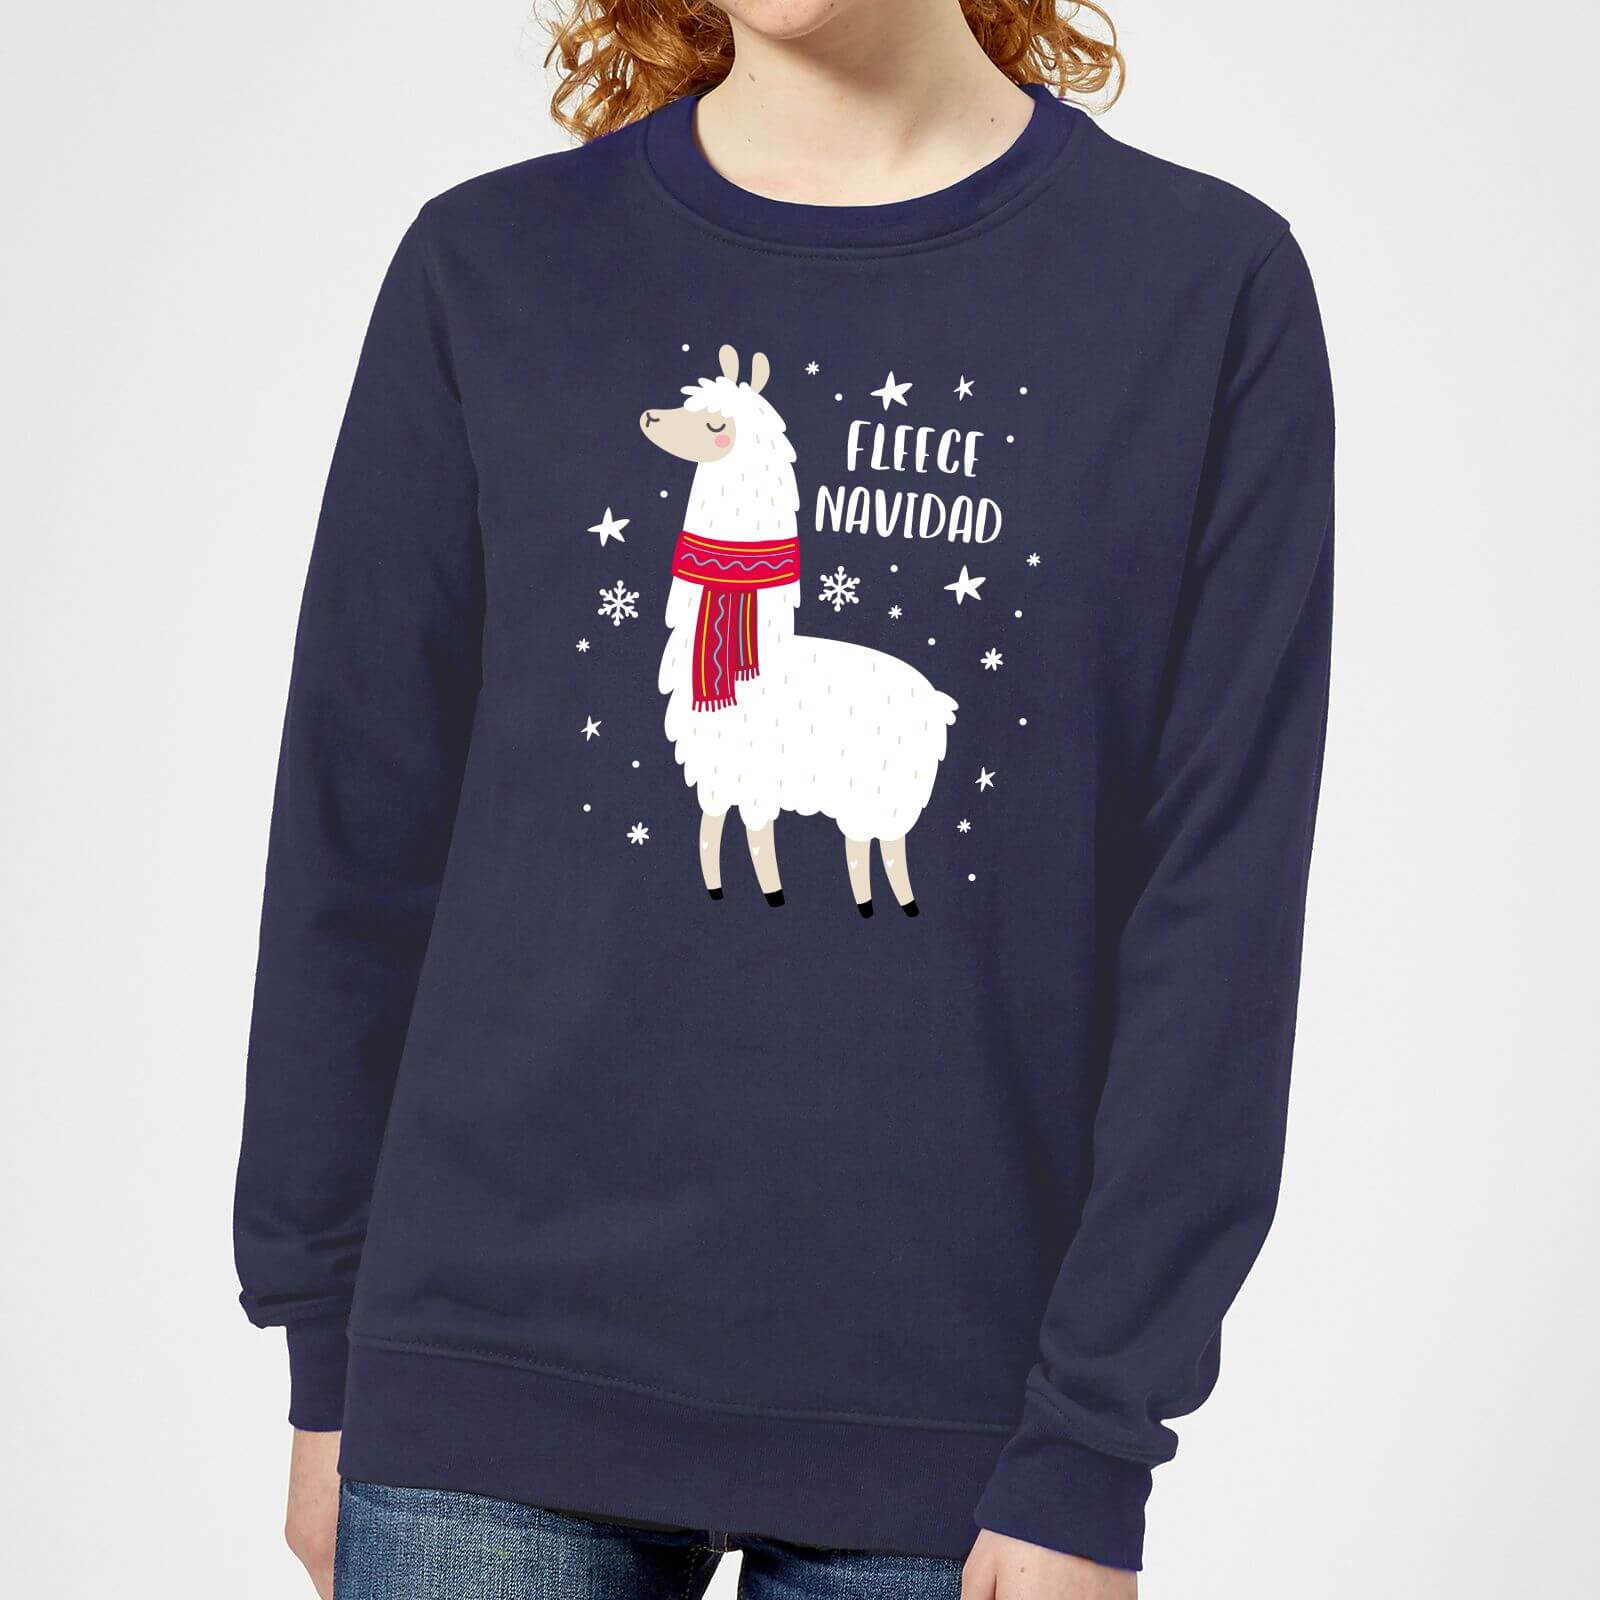 Fleece Navidad Women's Christmas Sweatshirt - Navy - XS